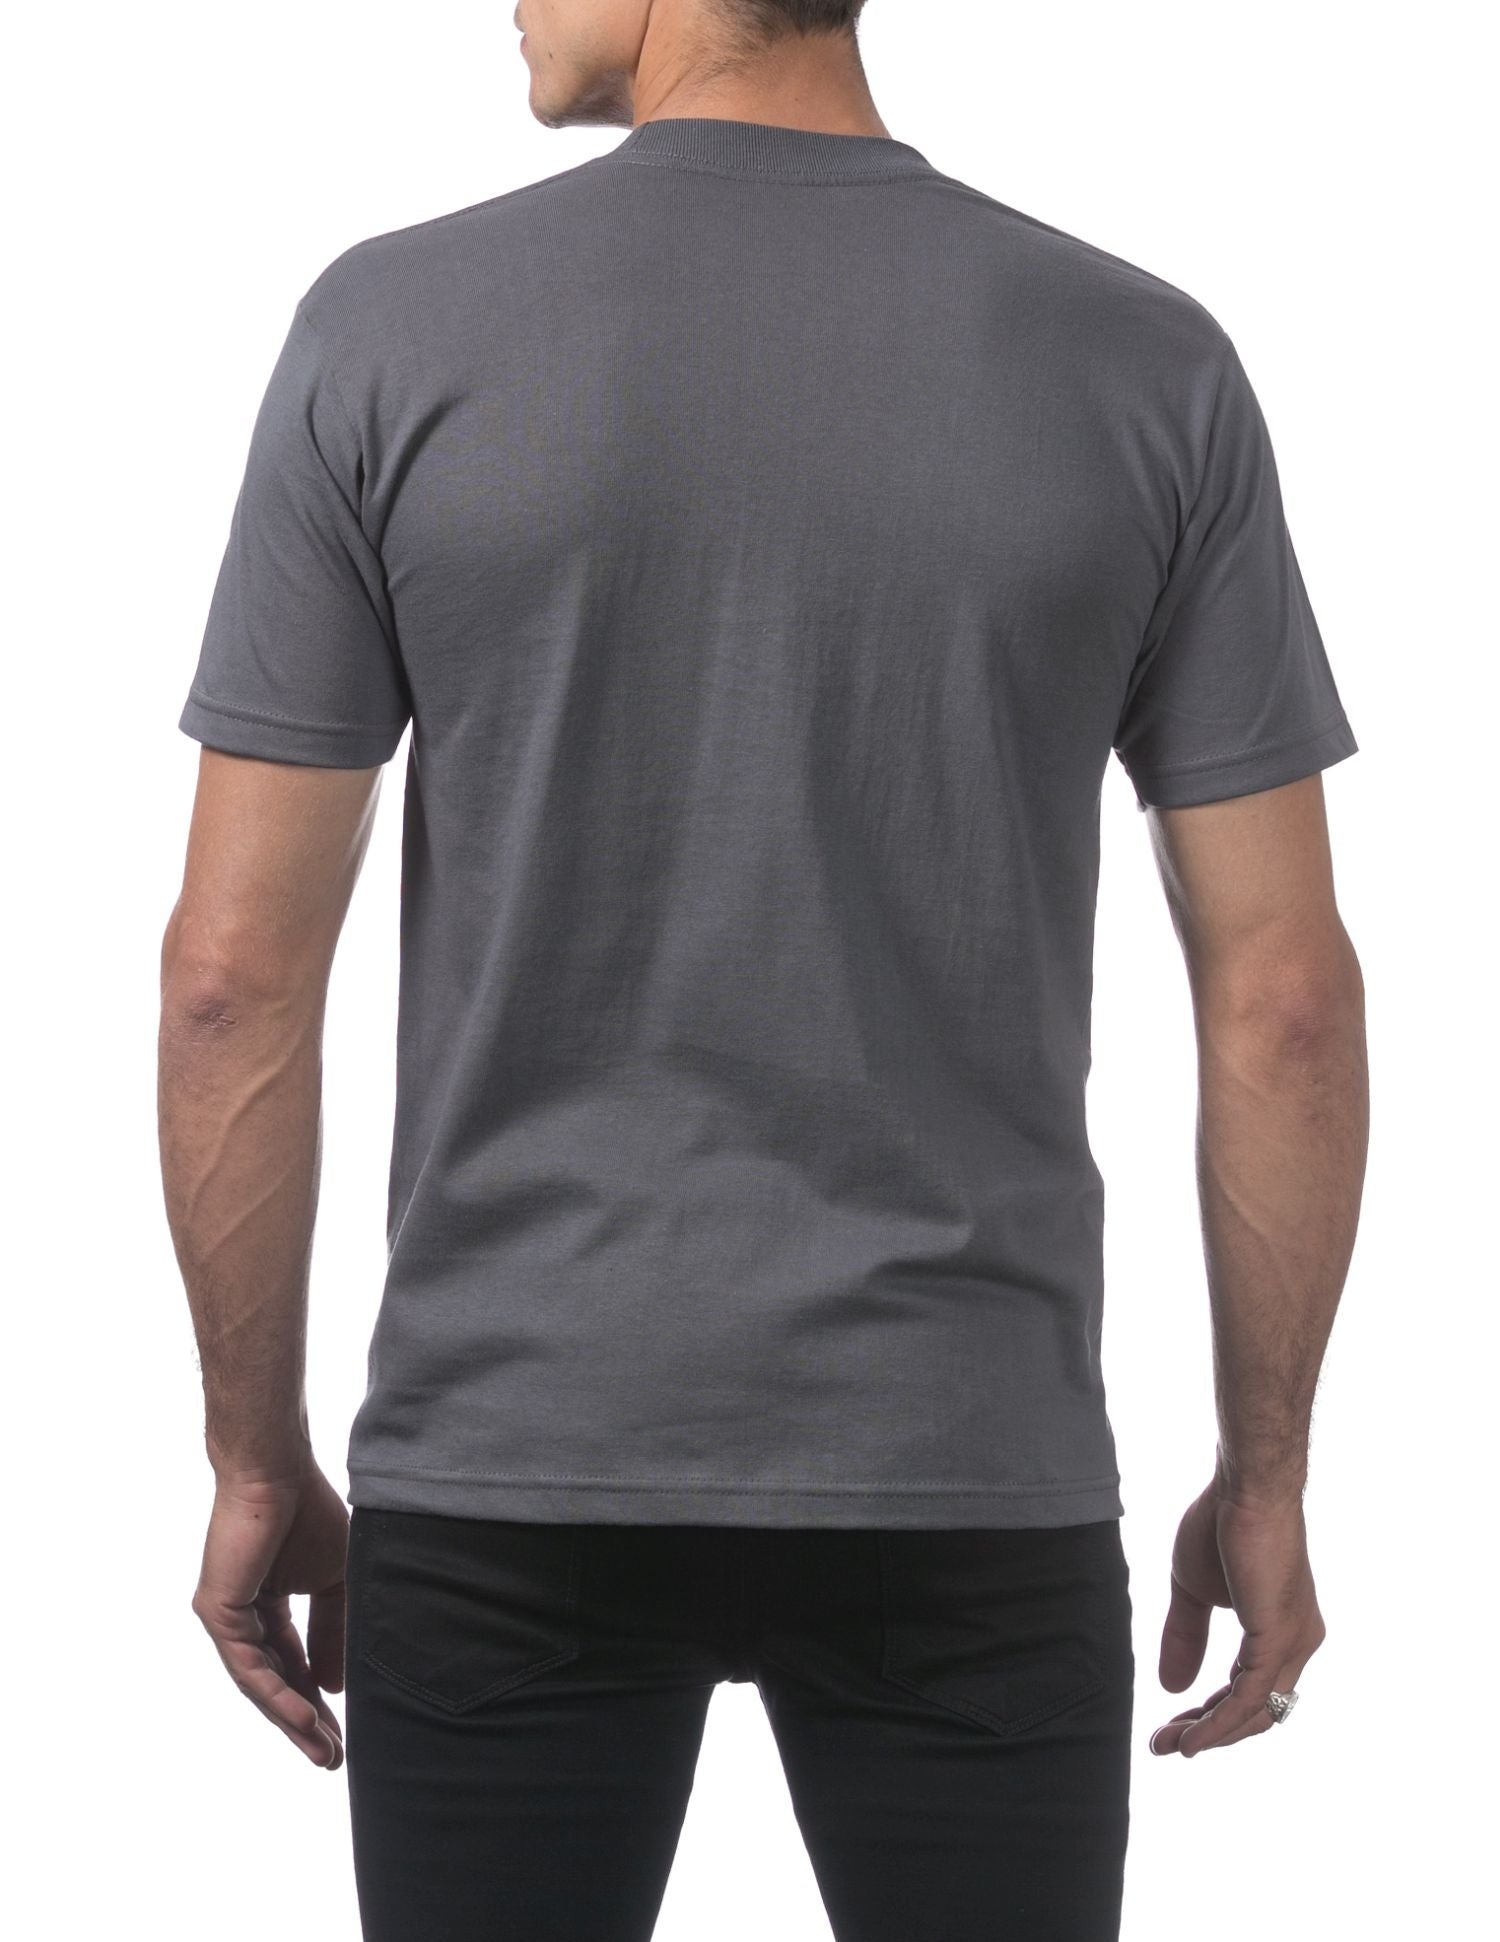 Pro Club Men's Comfort Cotton Short Sleeve T-Shirt - Graphite - Small - Pro-Distributing